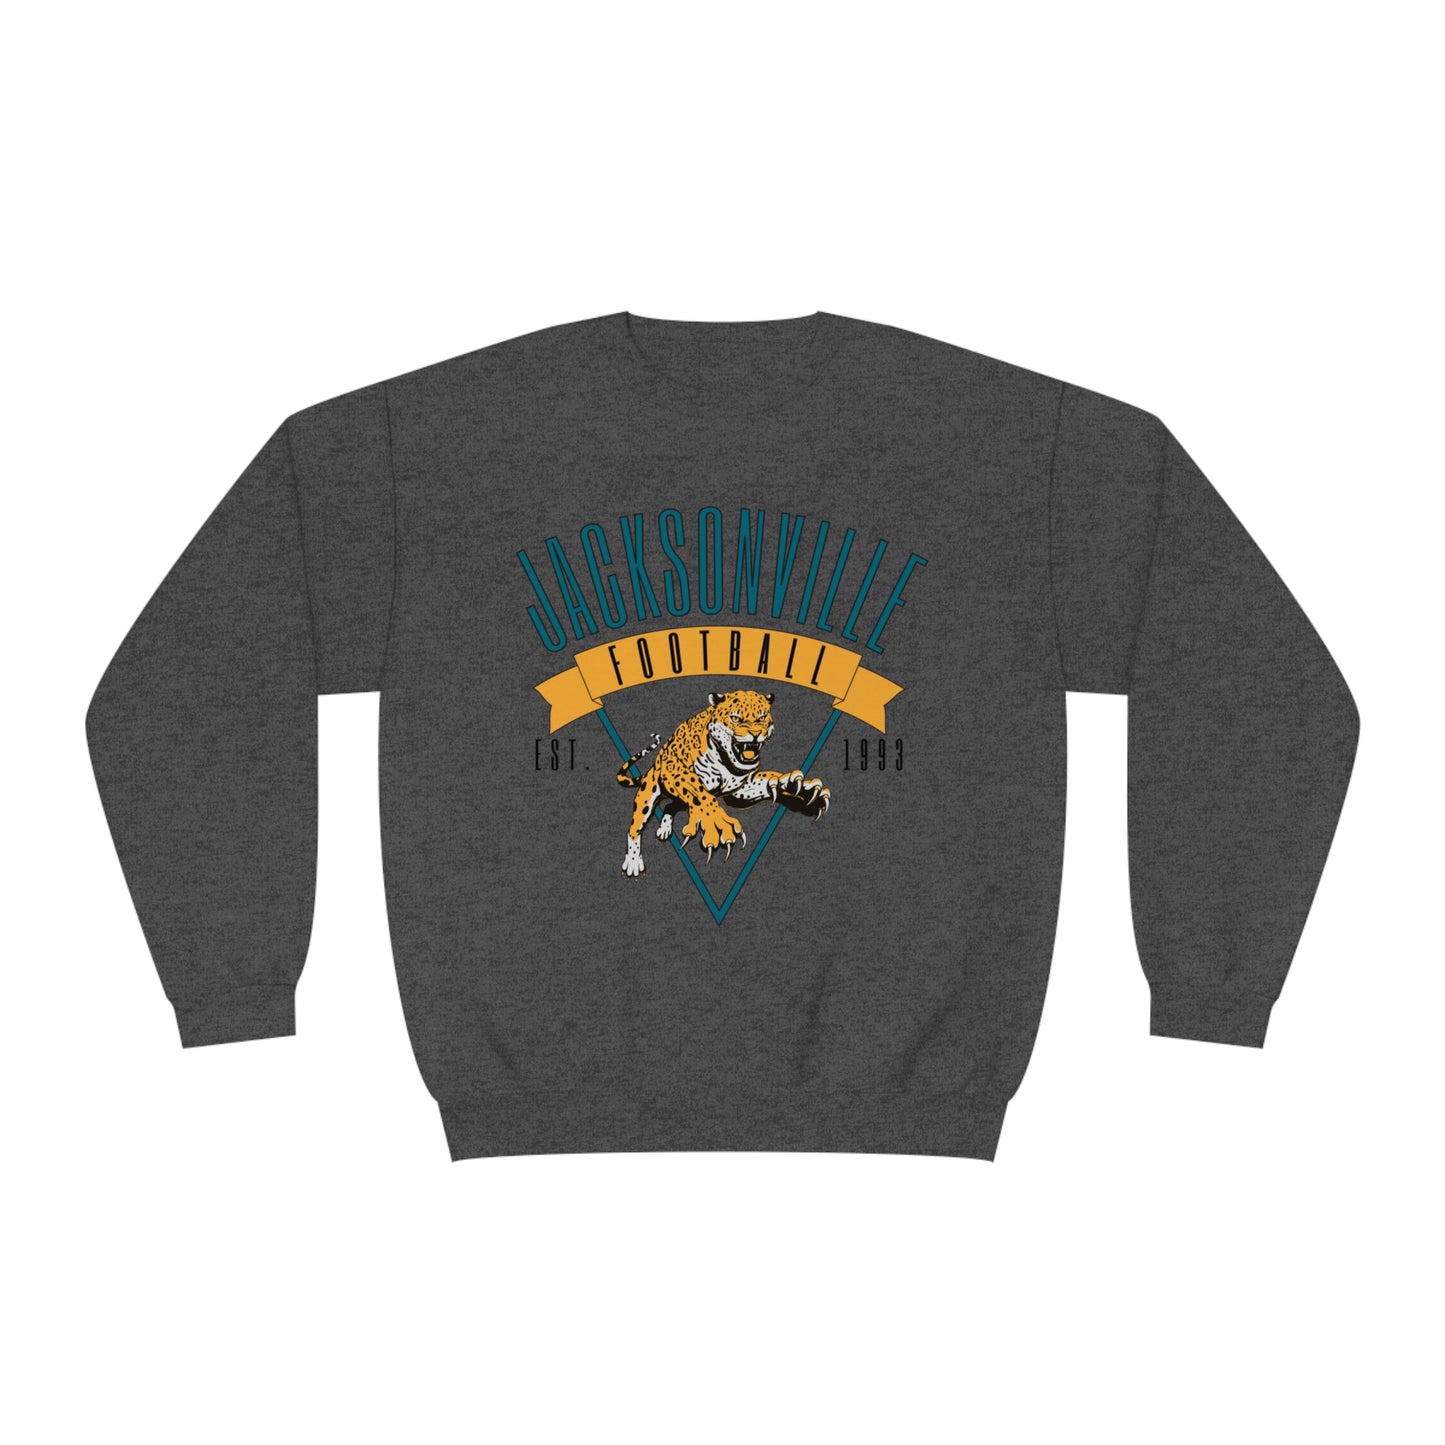 Vintage Jacksonville Jaguars Crewneck Sweatshirt - Retro Football Short Sleeve Oversized Men's & Women's - Design 